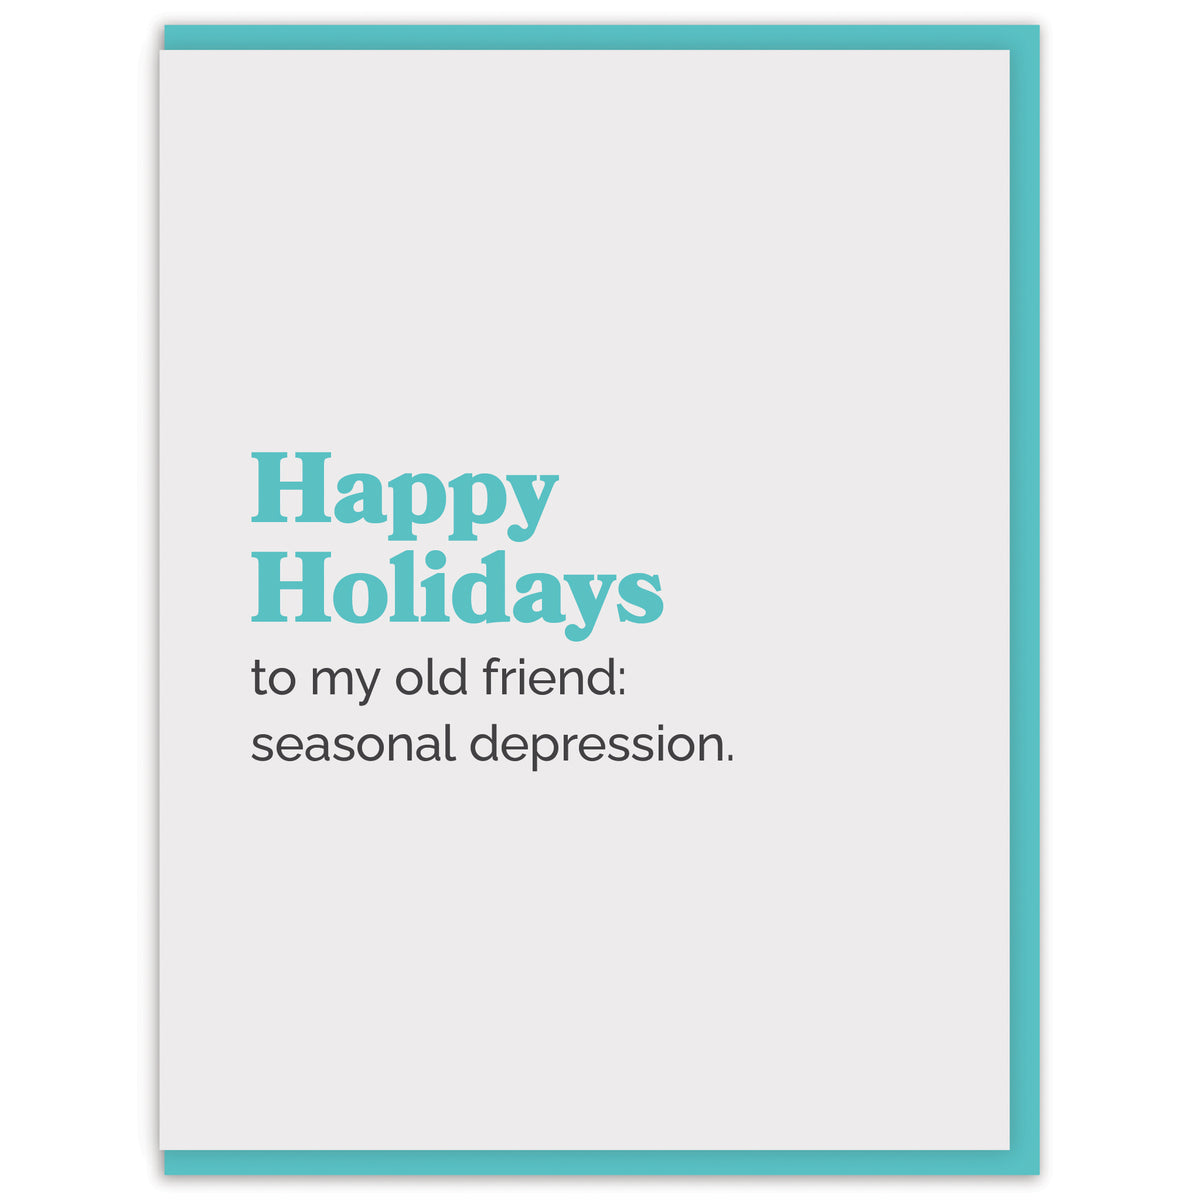 Happy Holidays to my old friend: seasonal depression.